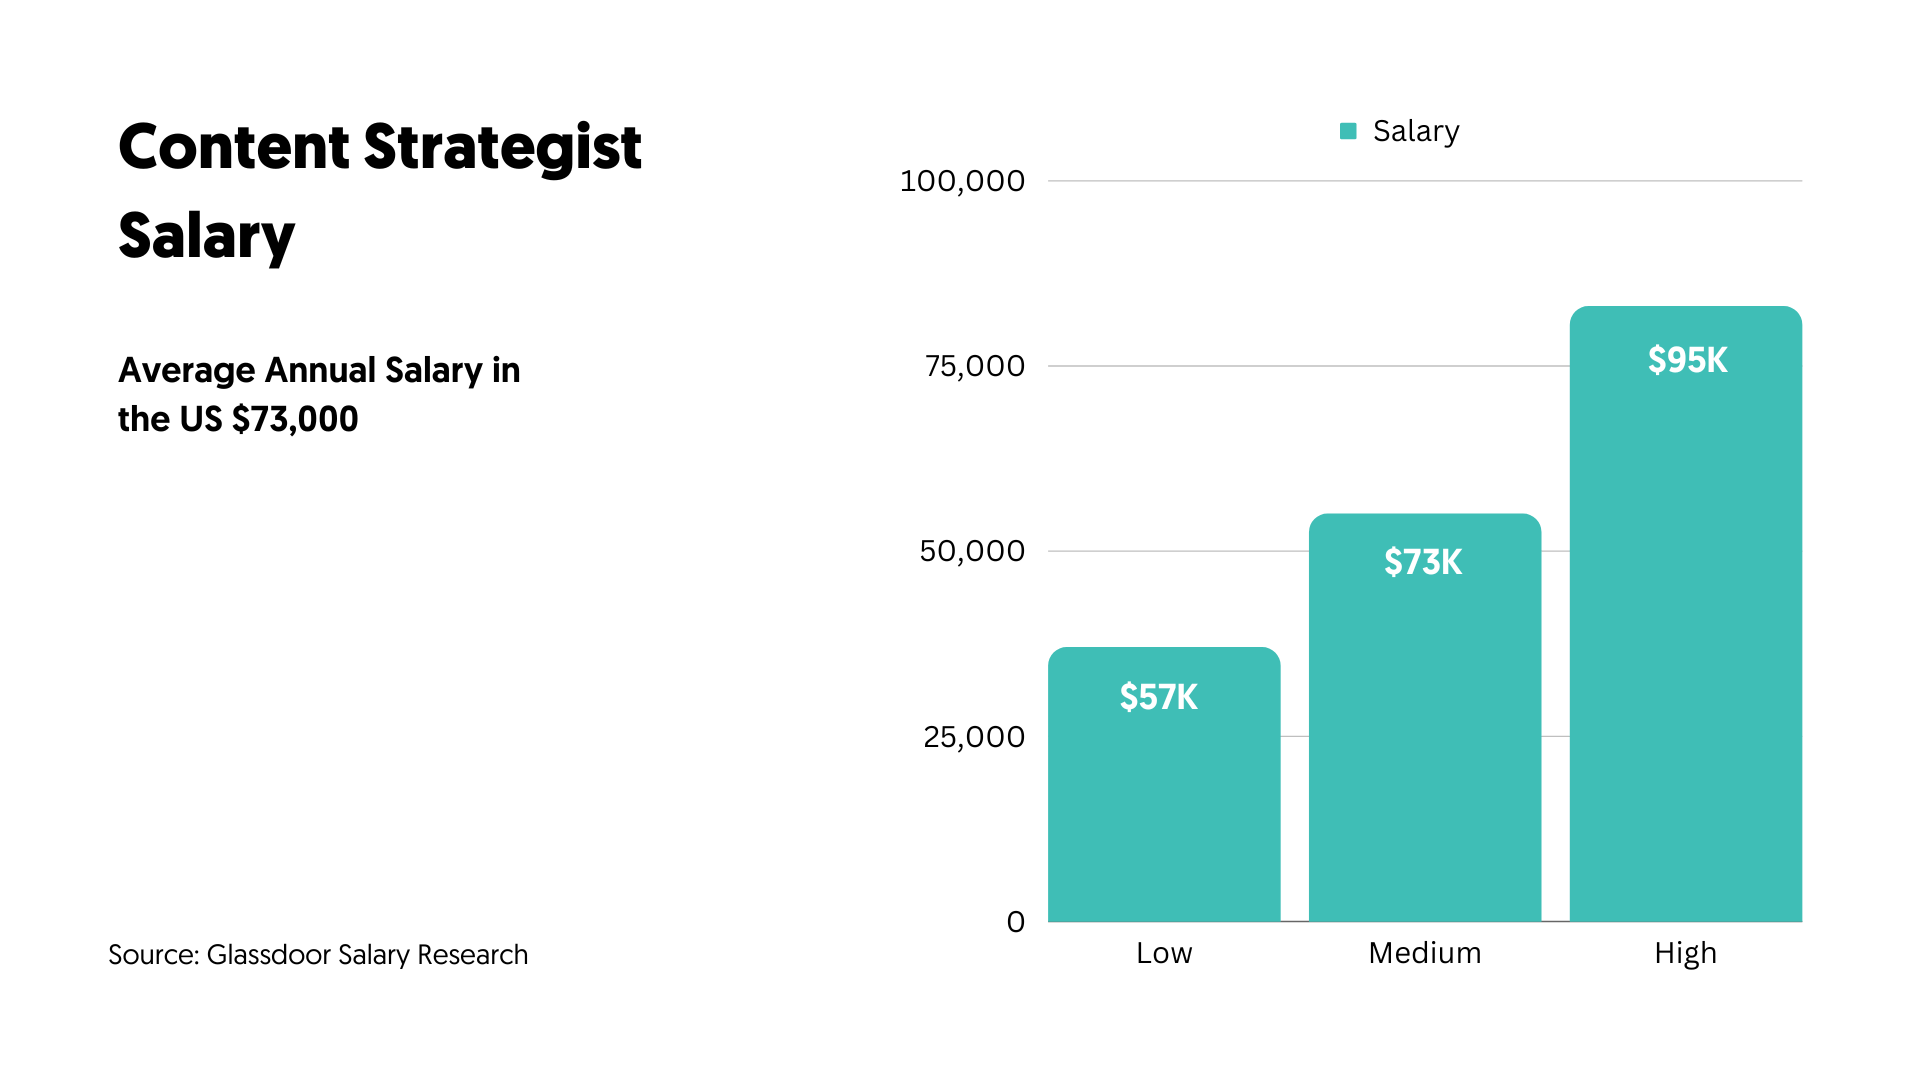 Content Strategist Salary